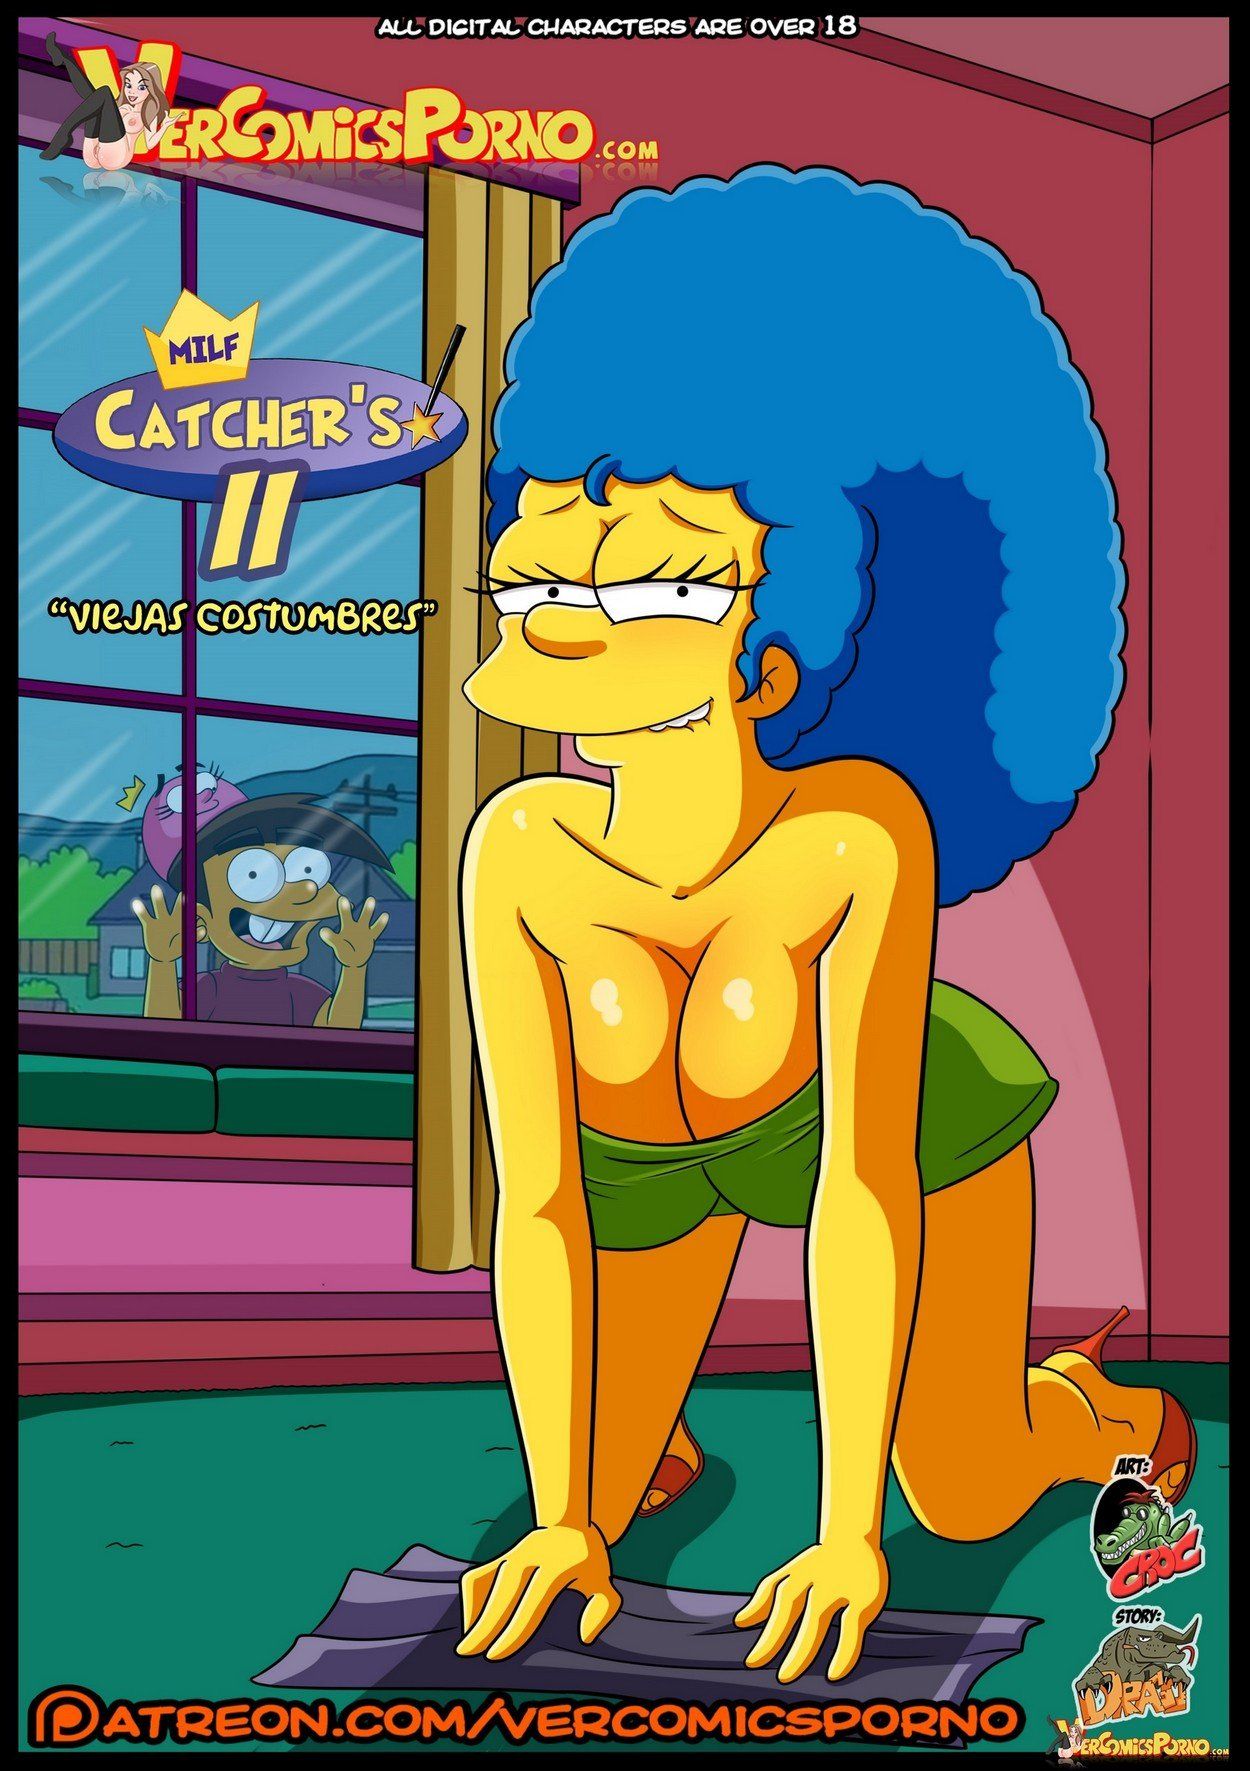 Von simpsons pornos die Die Simpsons